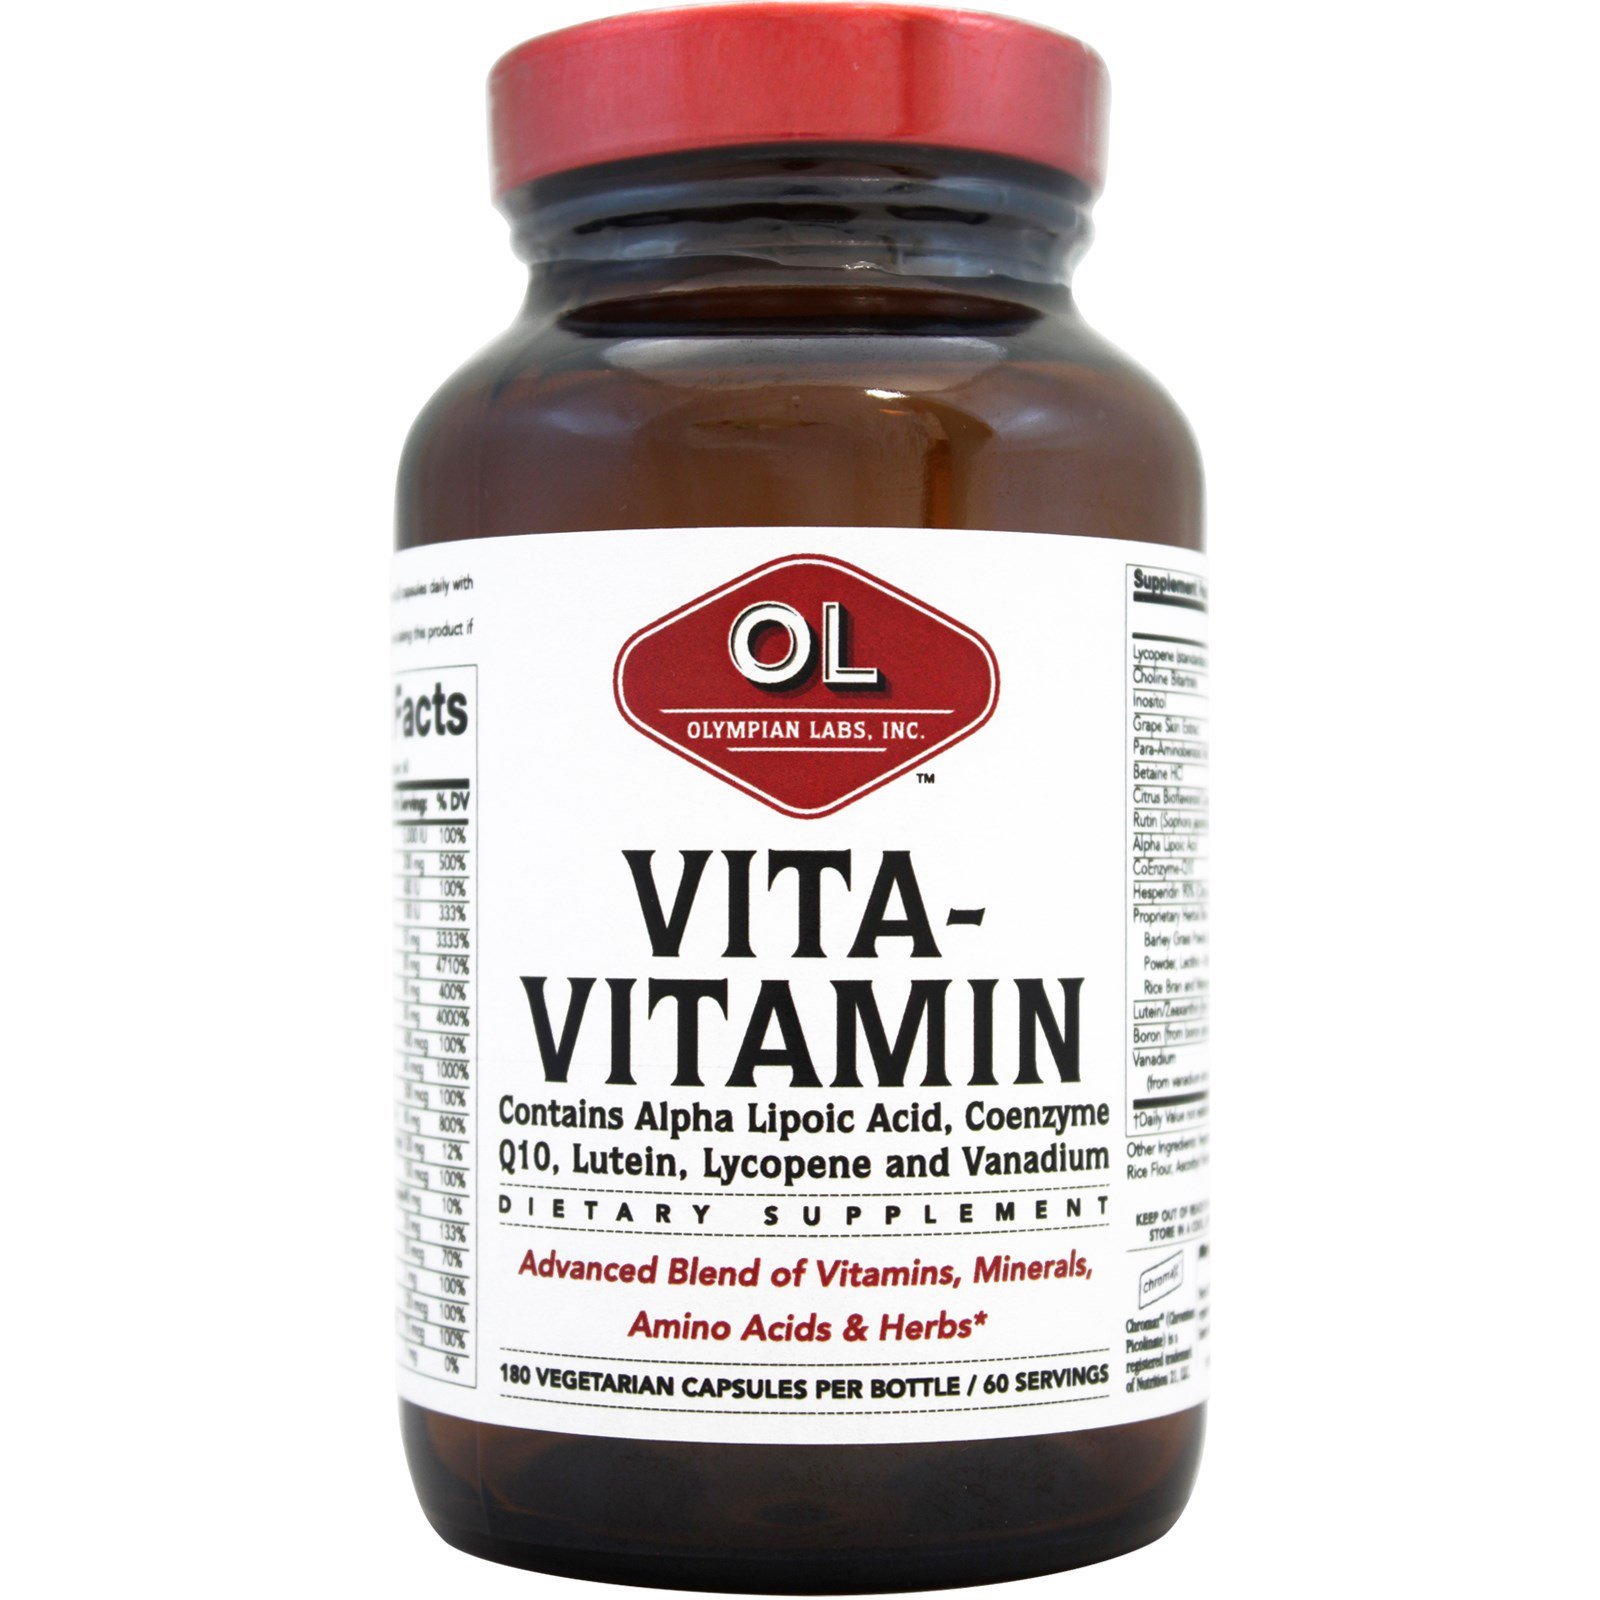 Vital vitamins. Vita витамины Швейцария. Nova vitae vitamine c. Added купить витамин.